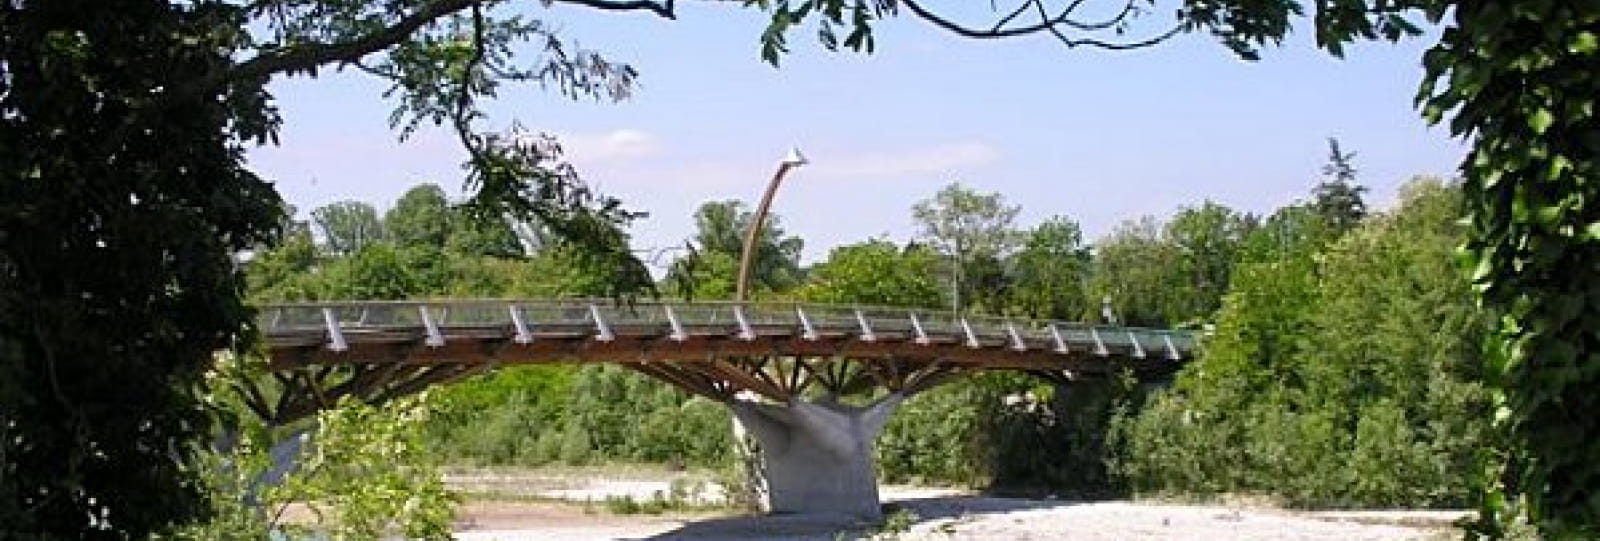 Pont en Bois